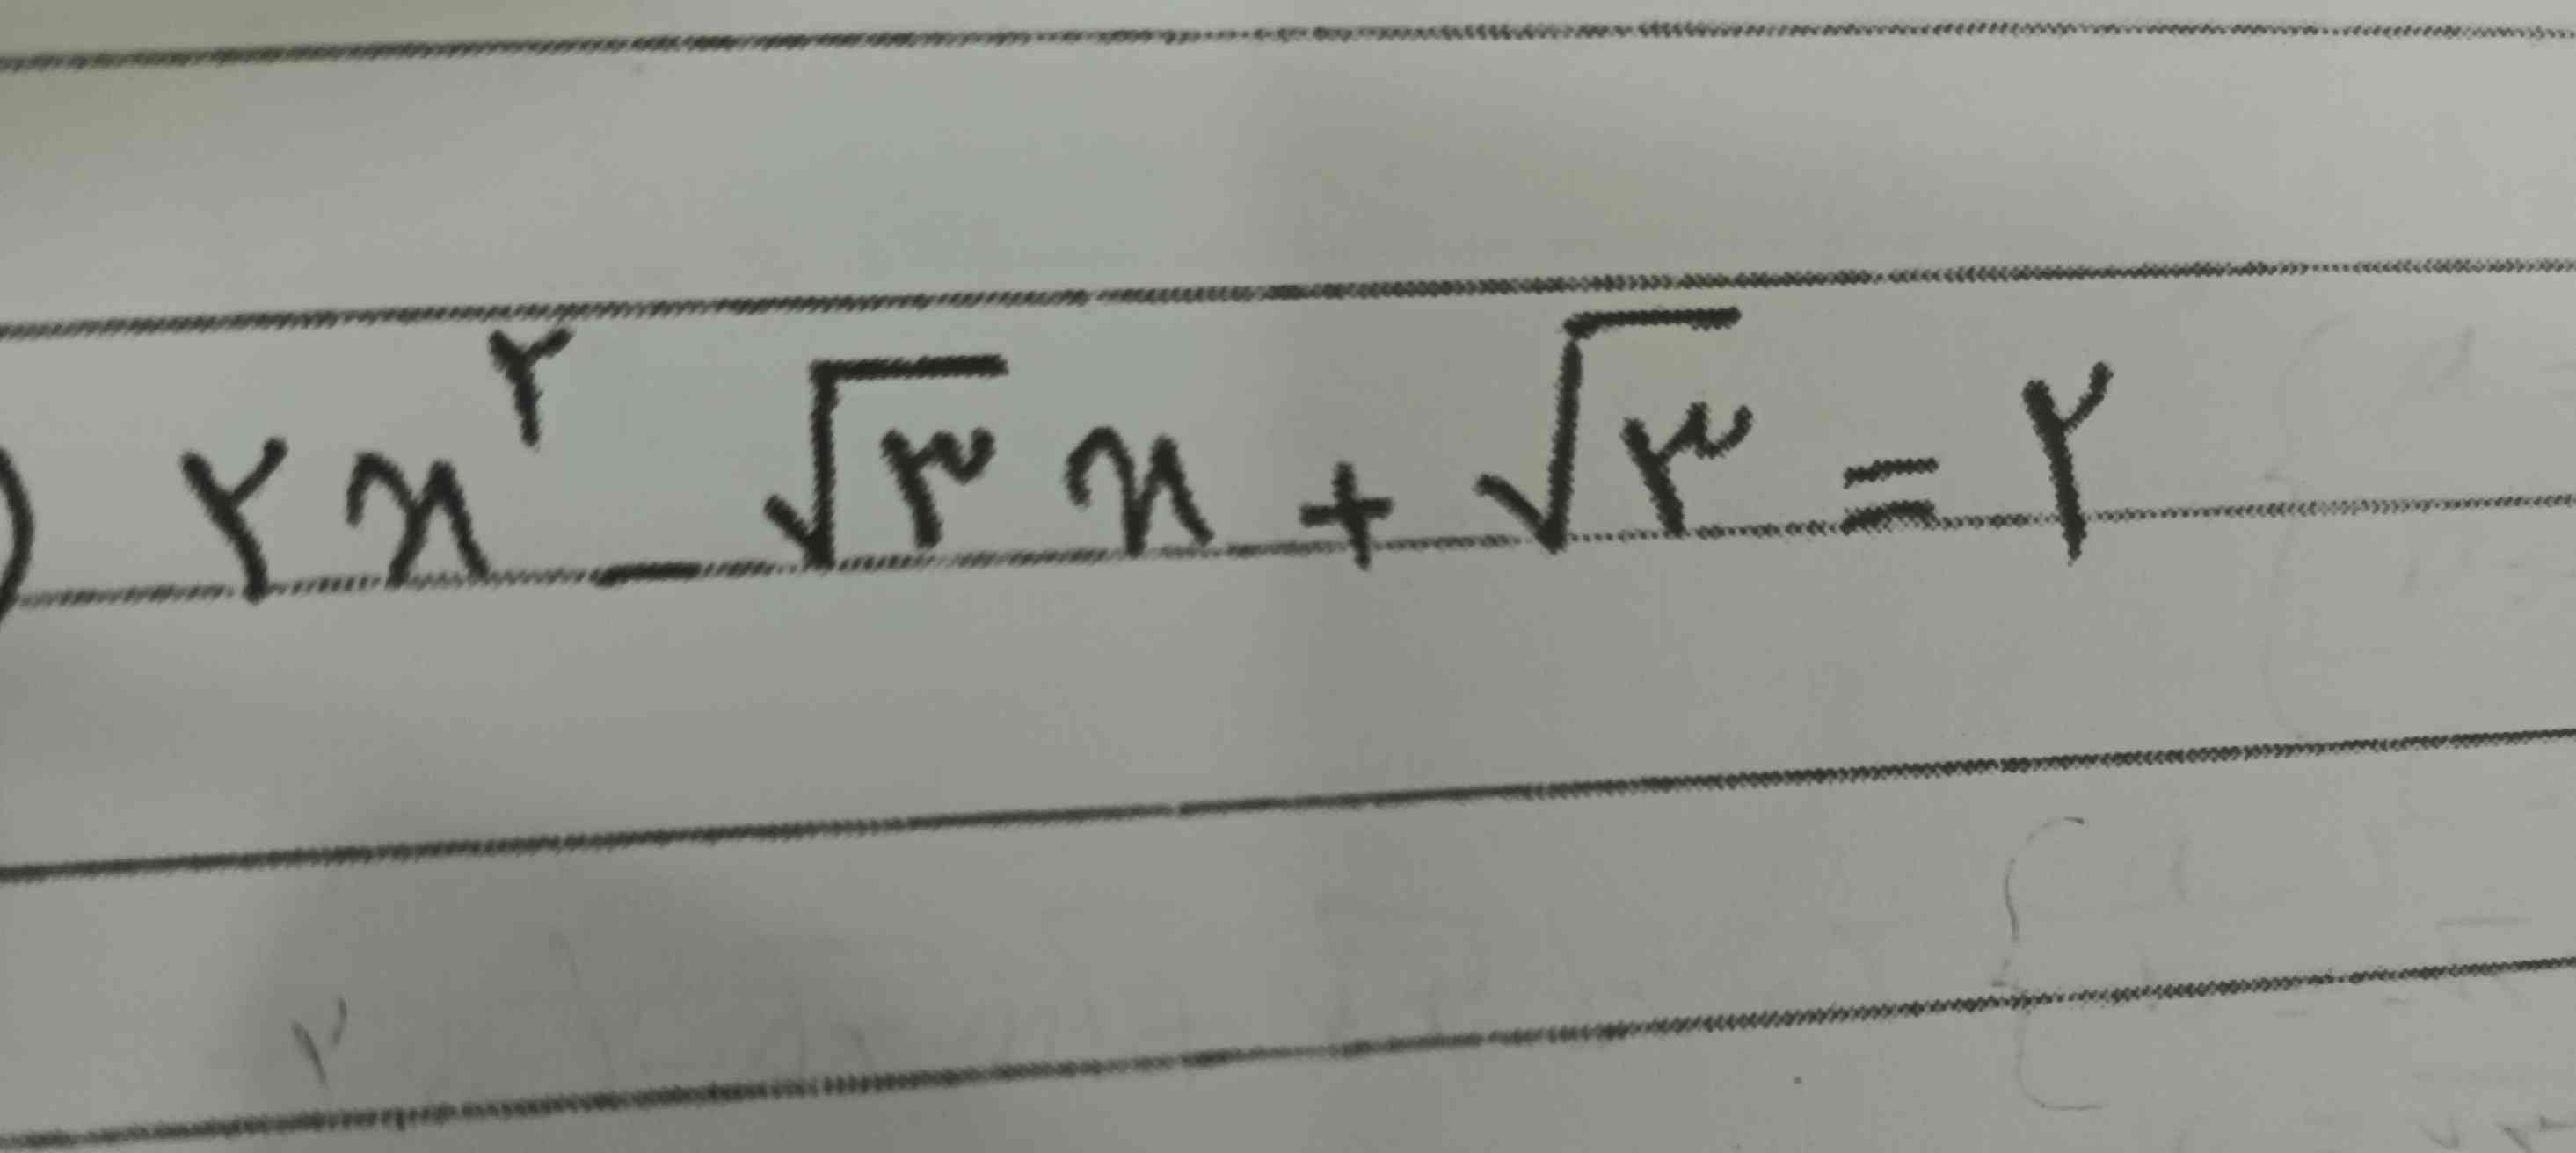 سلام لطفا جواب بدین به این معادله معرکه میدم